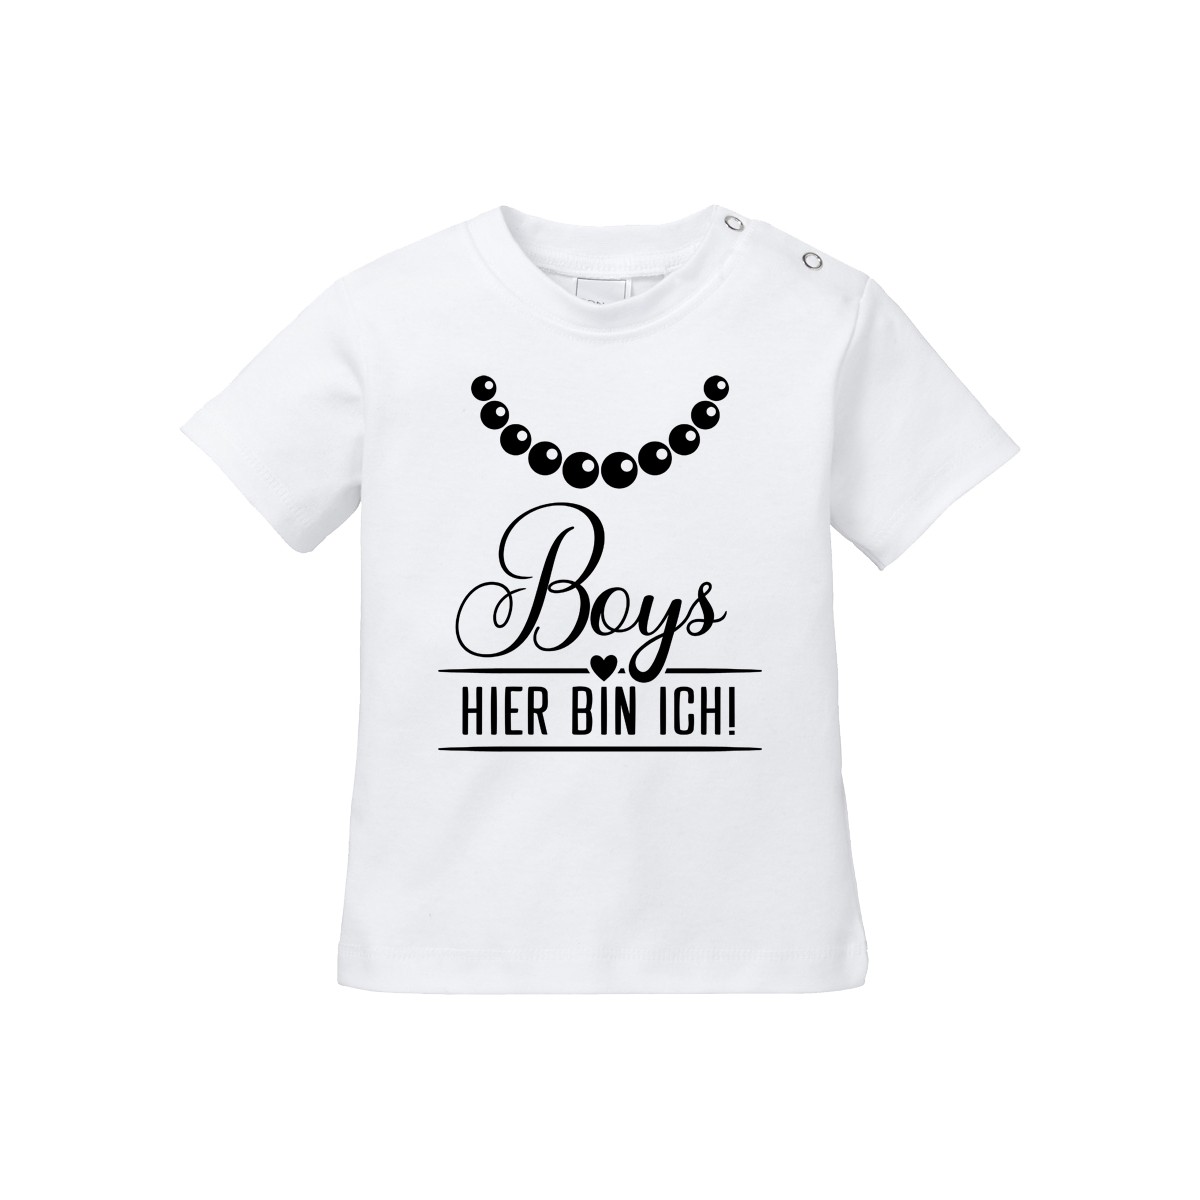 Kinder - Babyshirt Modell: Boys - HIER BIN ICH!